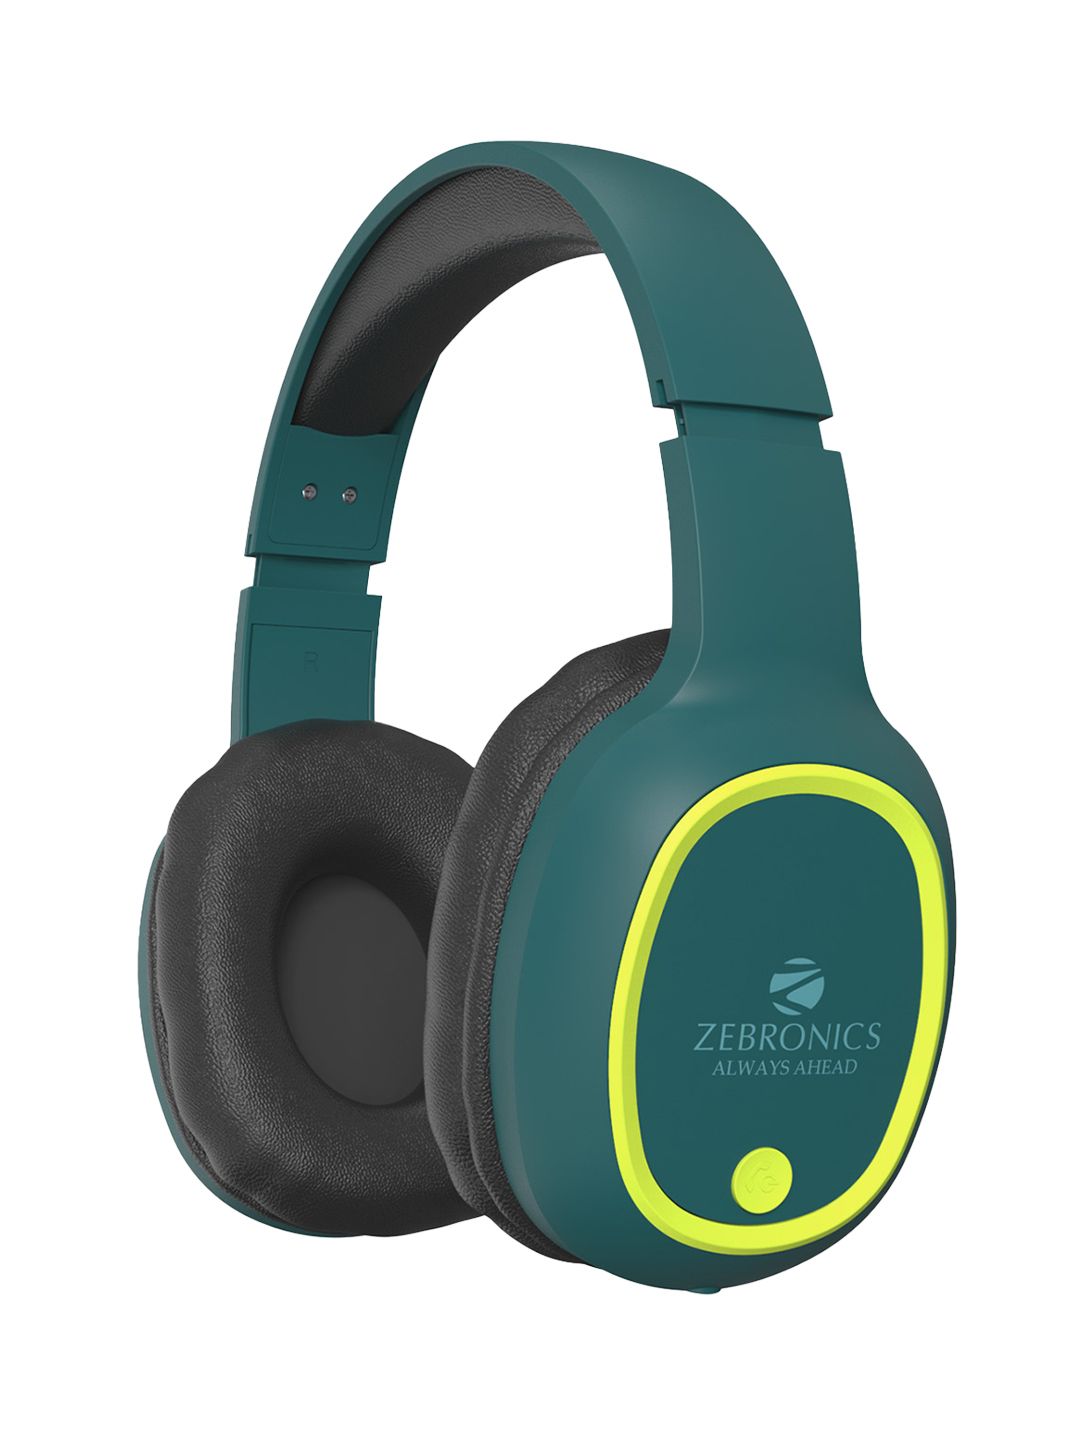 ZEBRONICS Zeb-Thunder Bluetooth Wireless On Ear Headphone-Teal Green Price in India